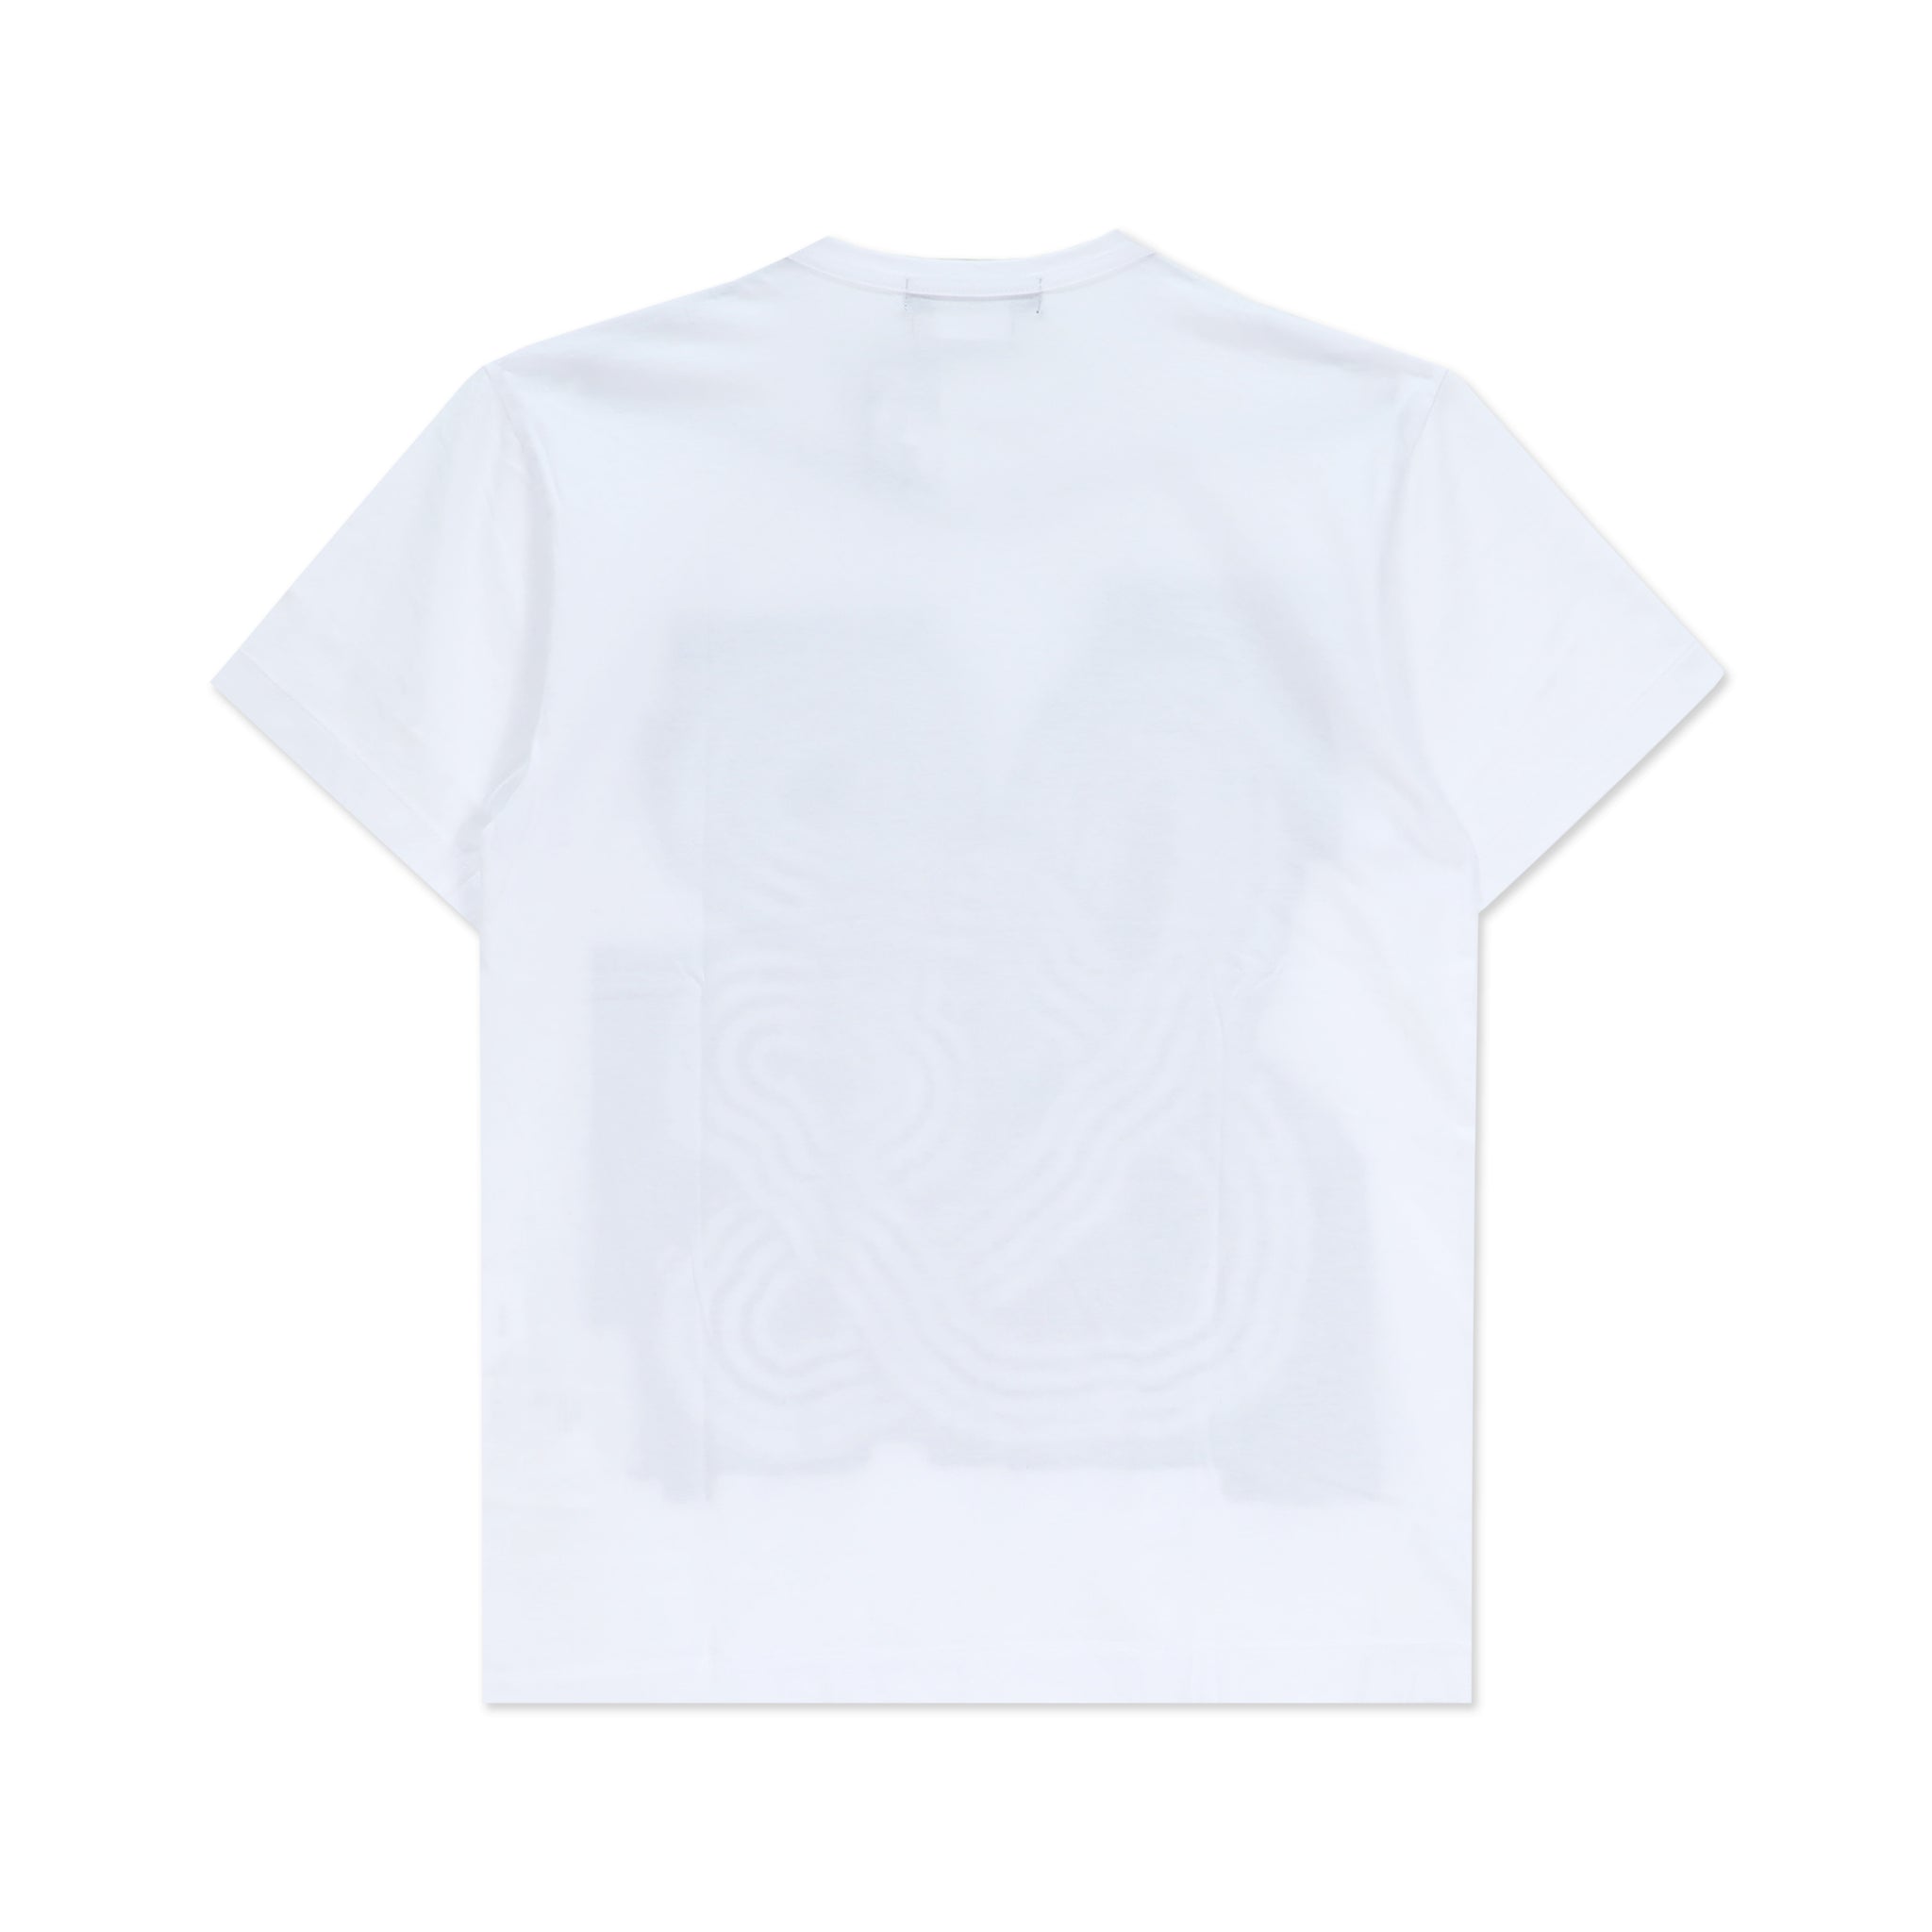 Sofia Clausse Black and White Screen Print T-Shirt